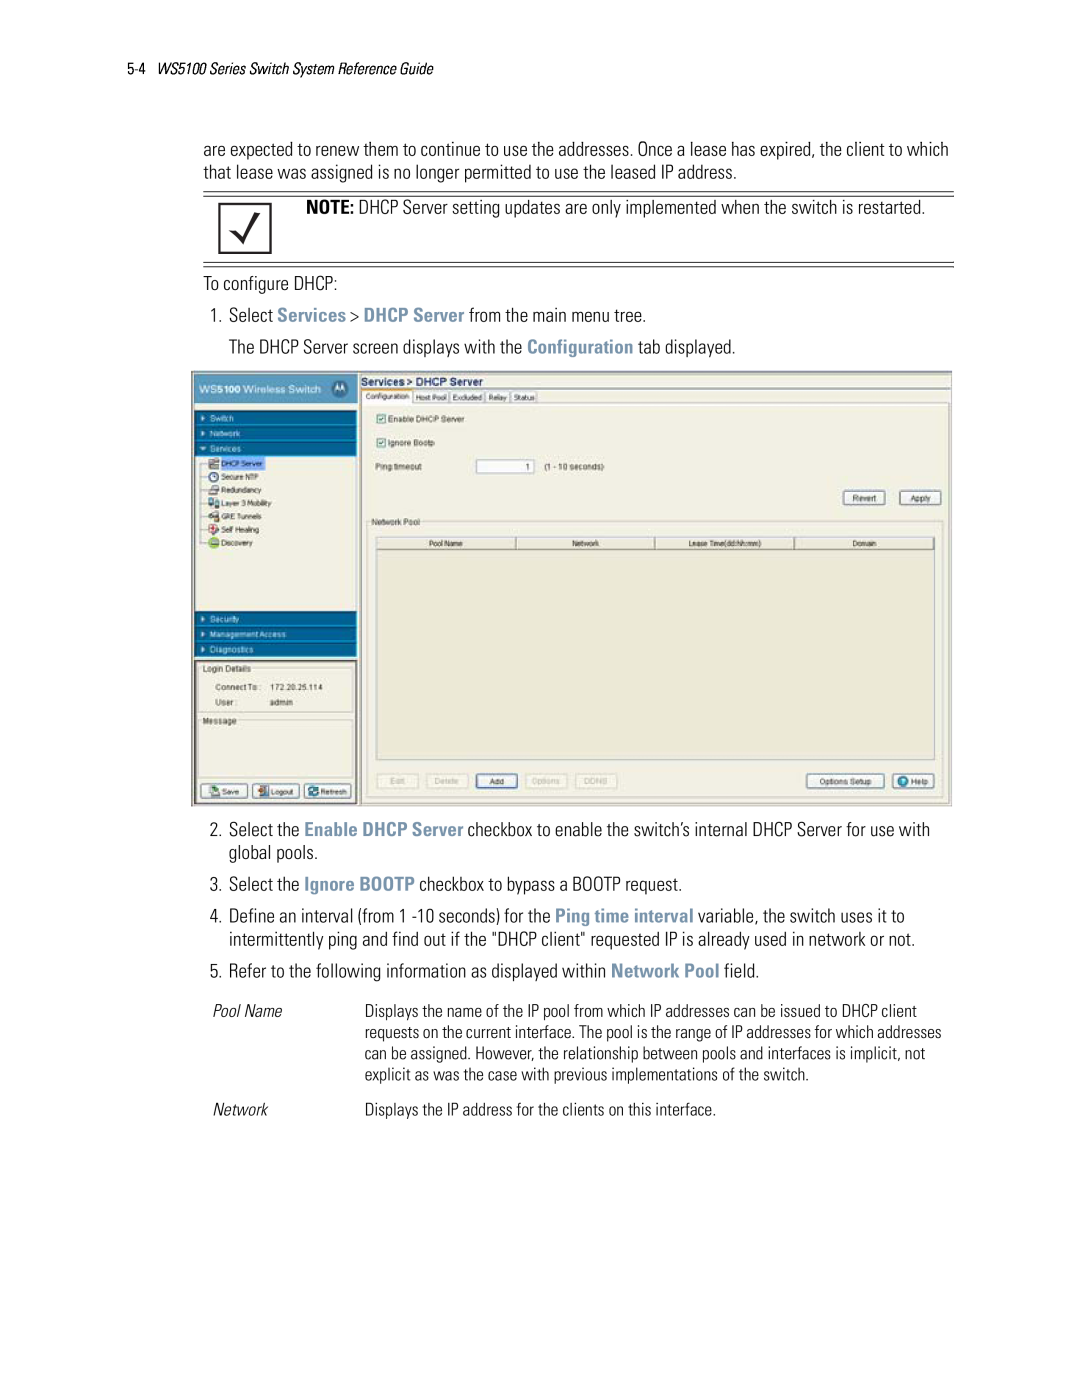 Motorola WS5100 manual To configure DHCP 